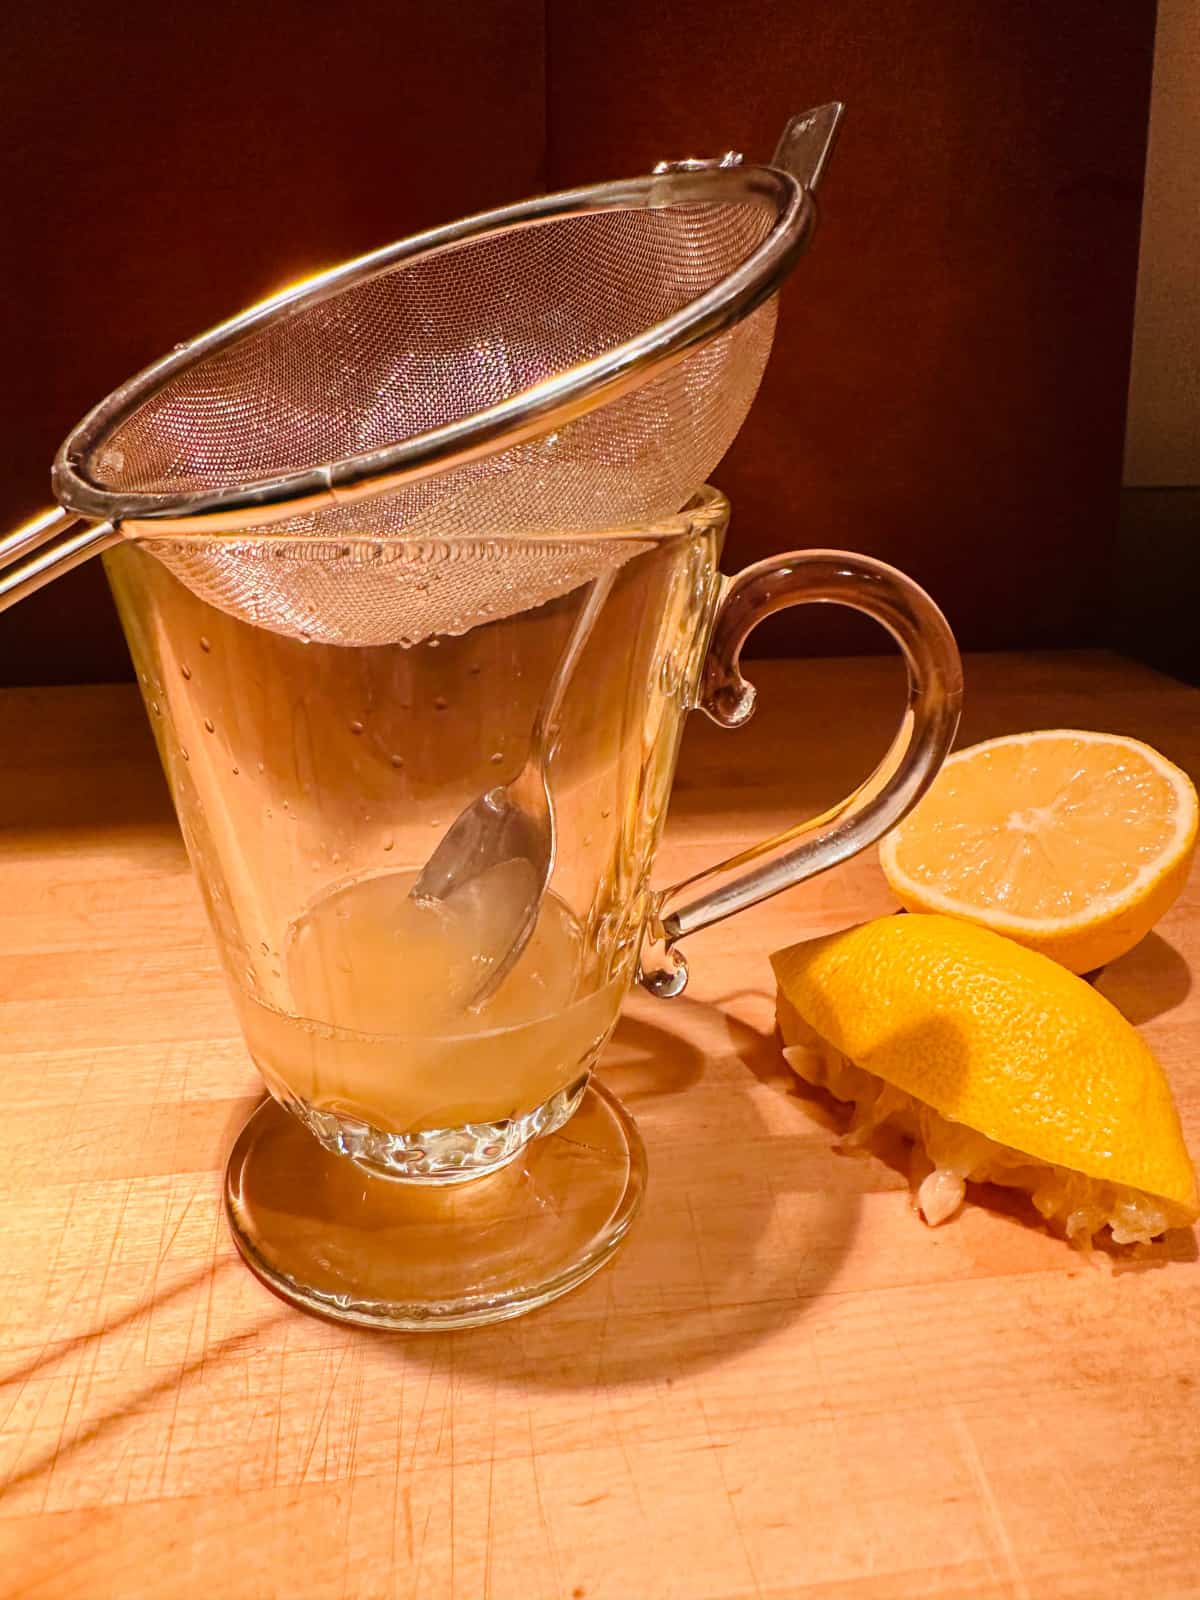 Metal strainer over glass mug containing honey and lemon juice.